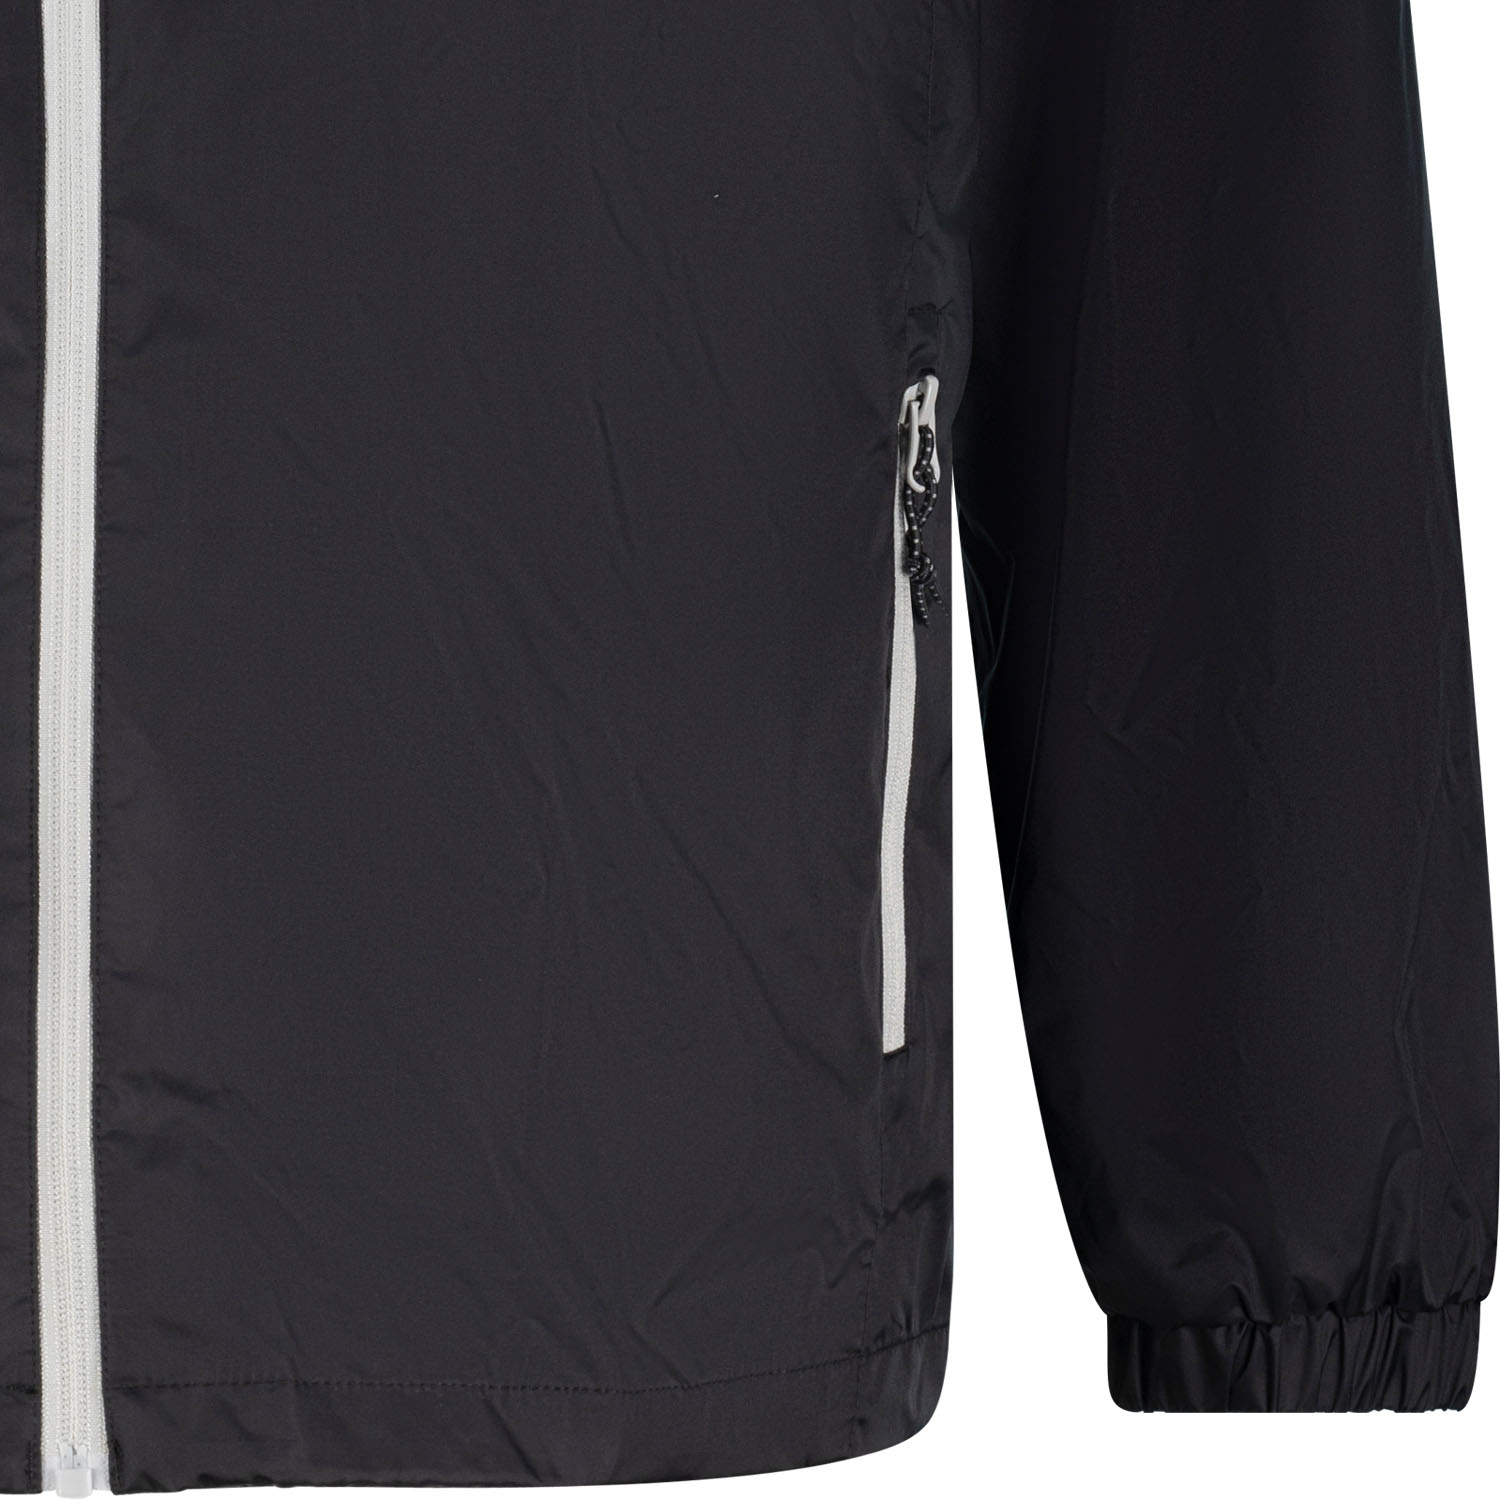 Men's rain jacket black series London by ADAMO in oversizes up to 12XL